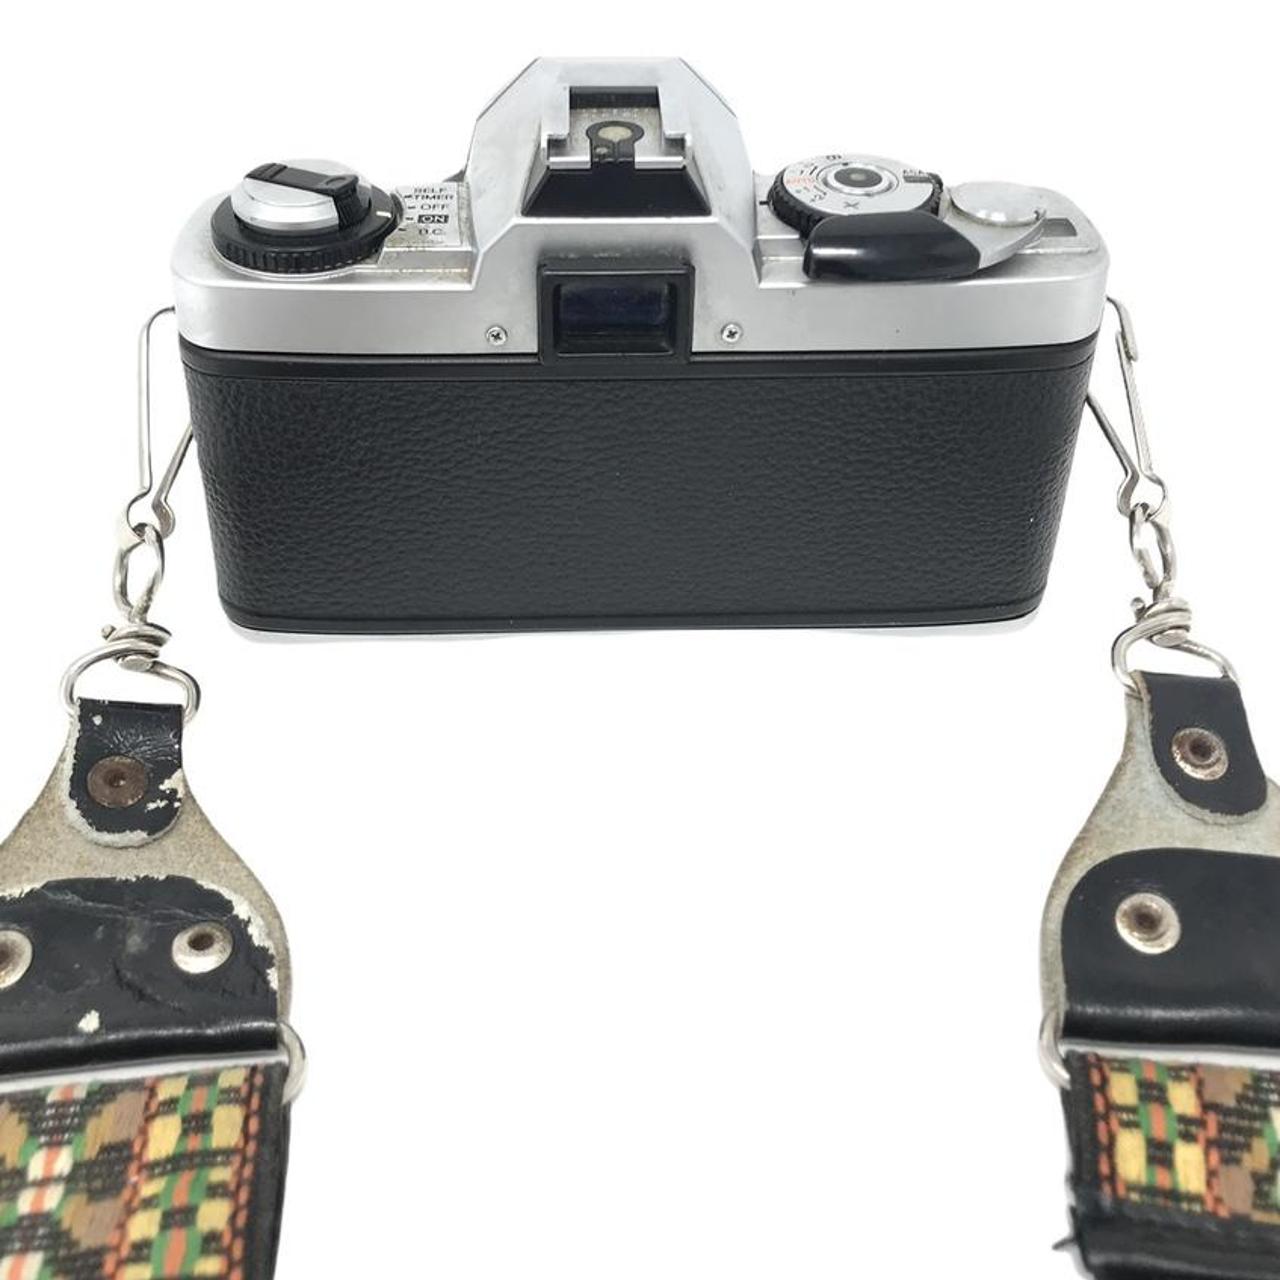 Minolta Cameras-and-accessories (4)